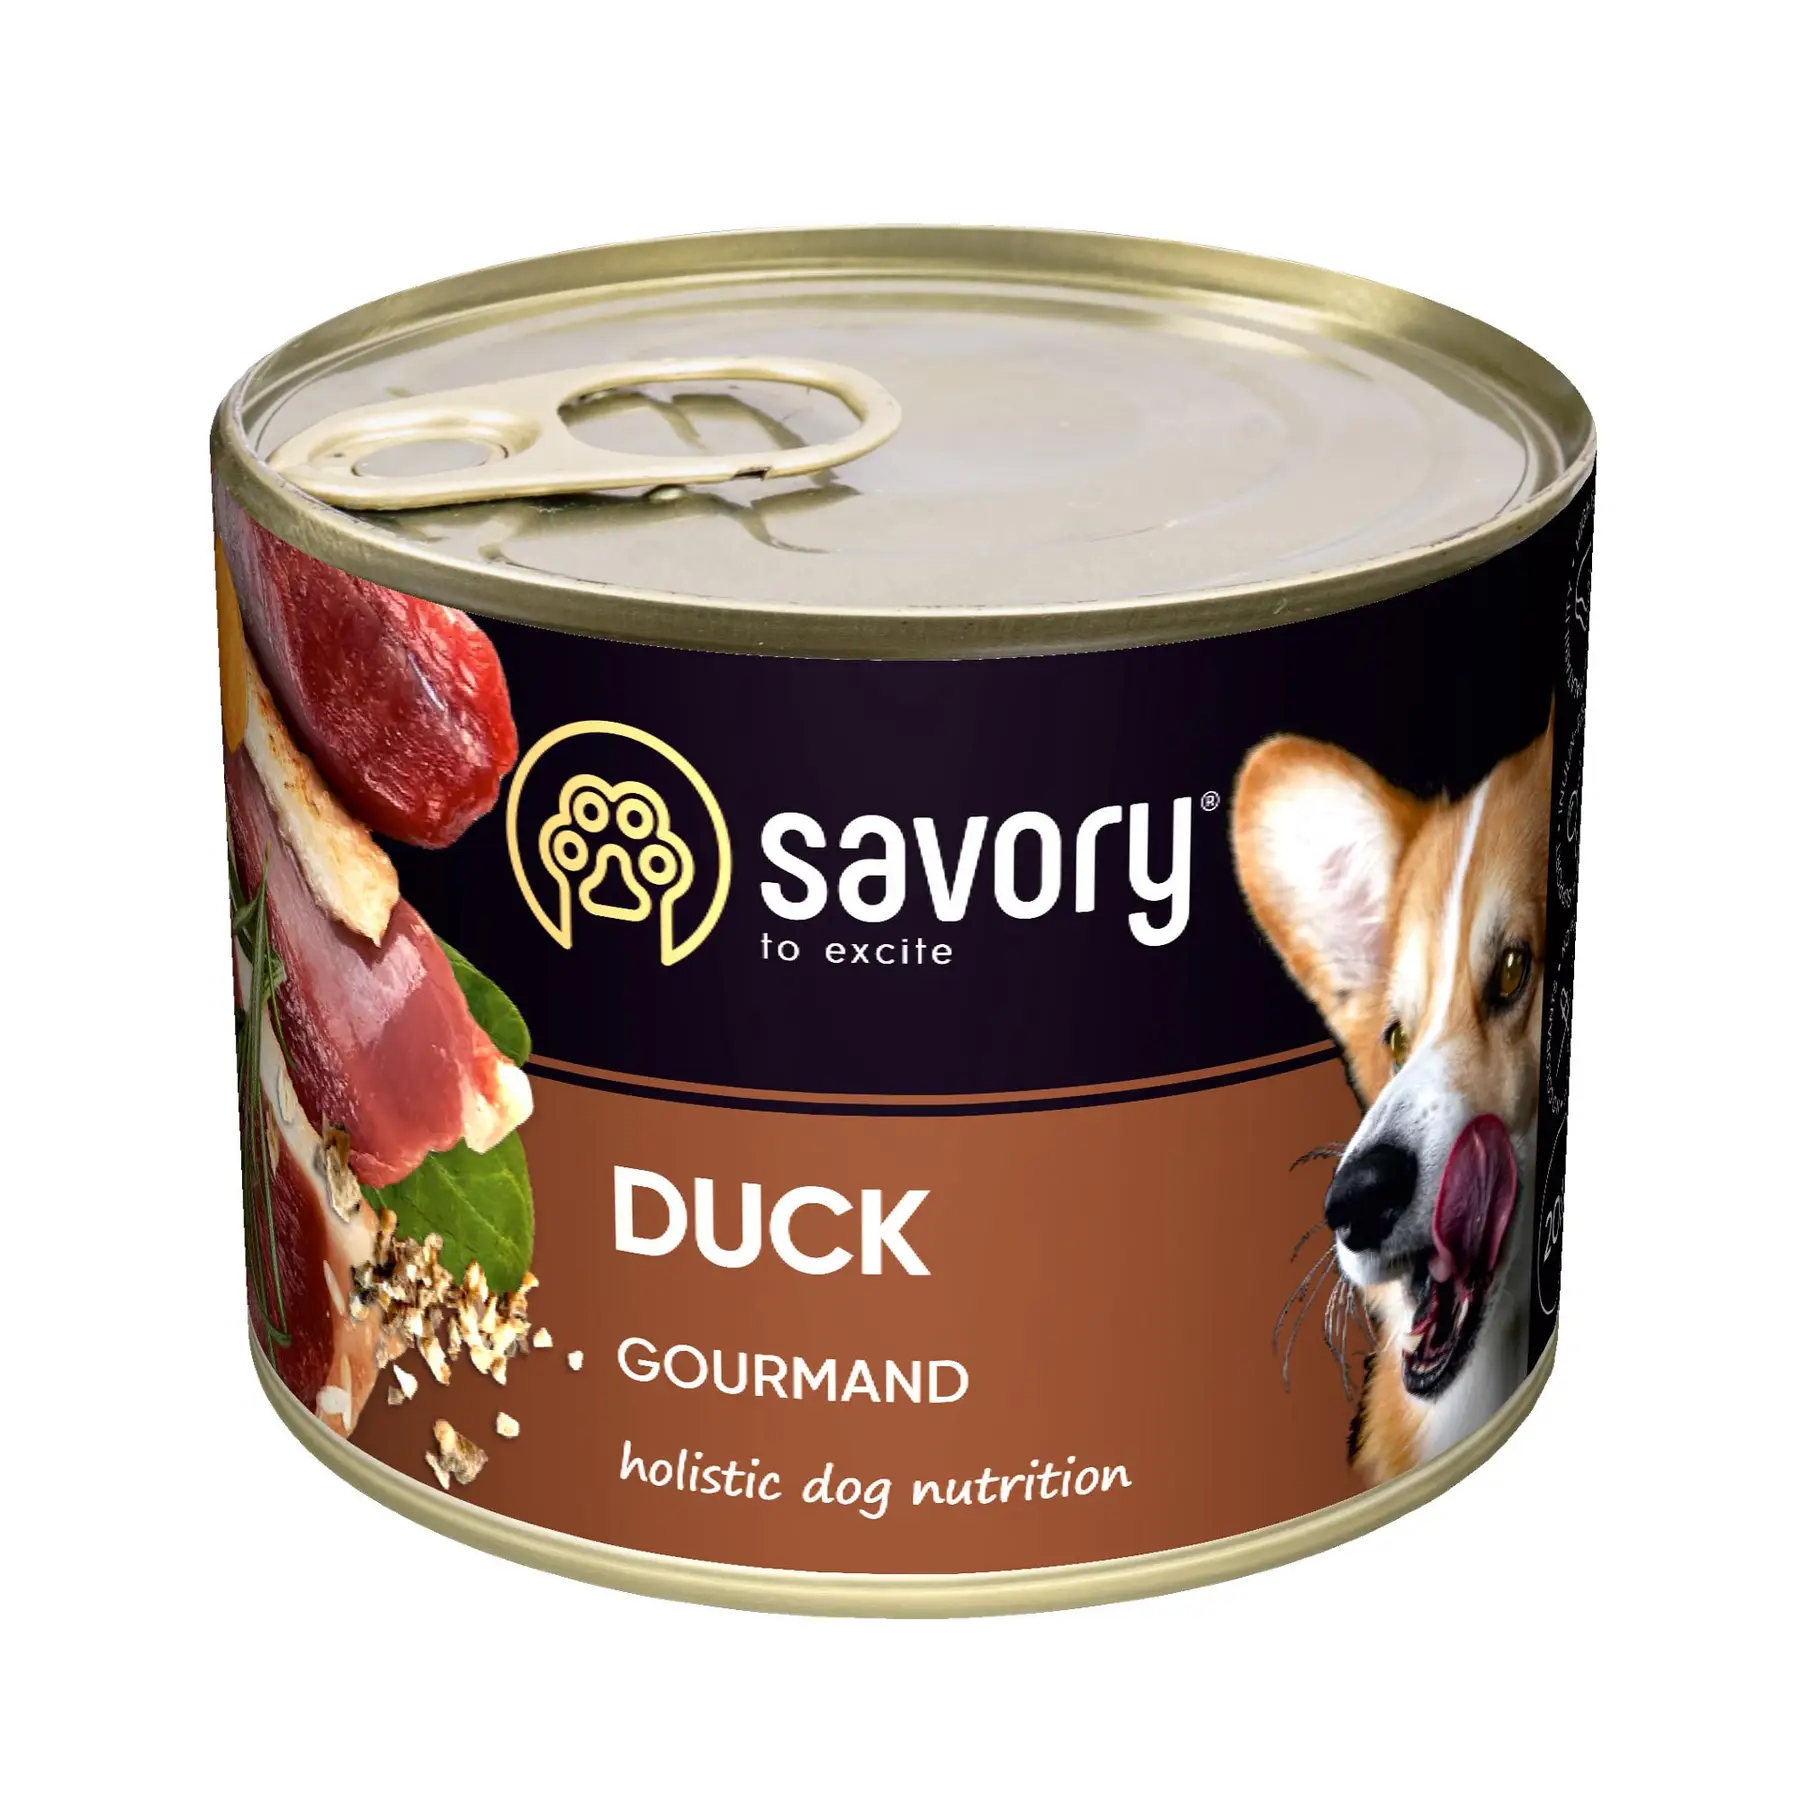 Вологий корм для собак Savory Gourmand Duck